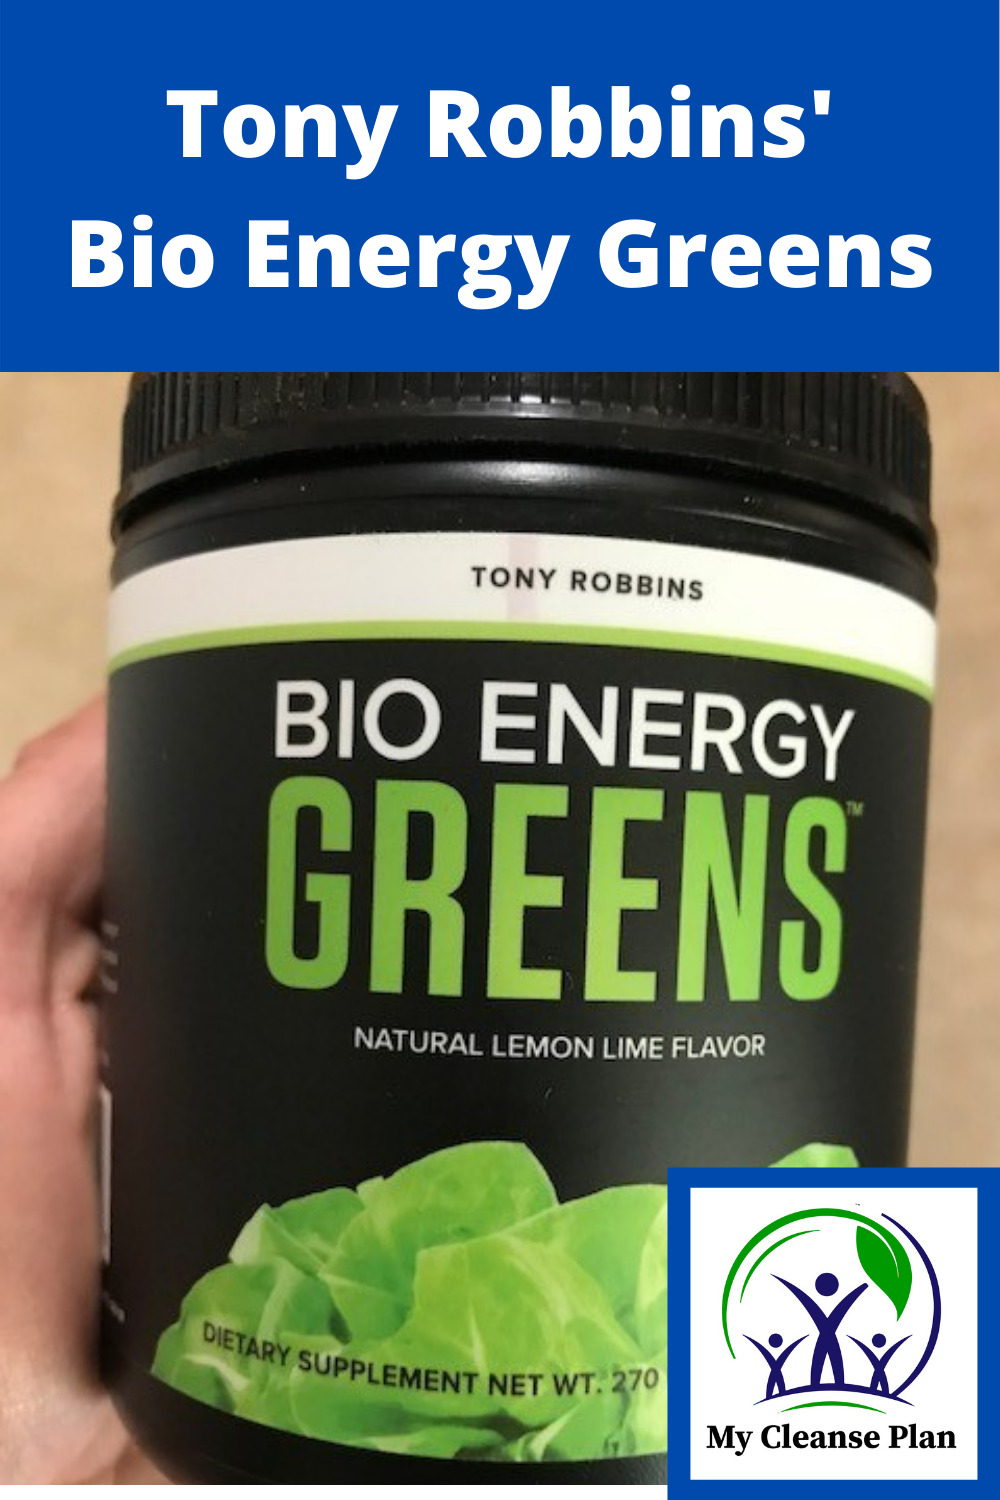 Tony Robbins Bio Energy Green Drink